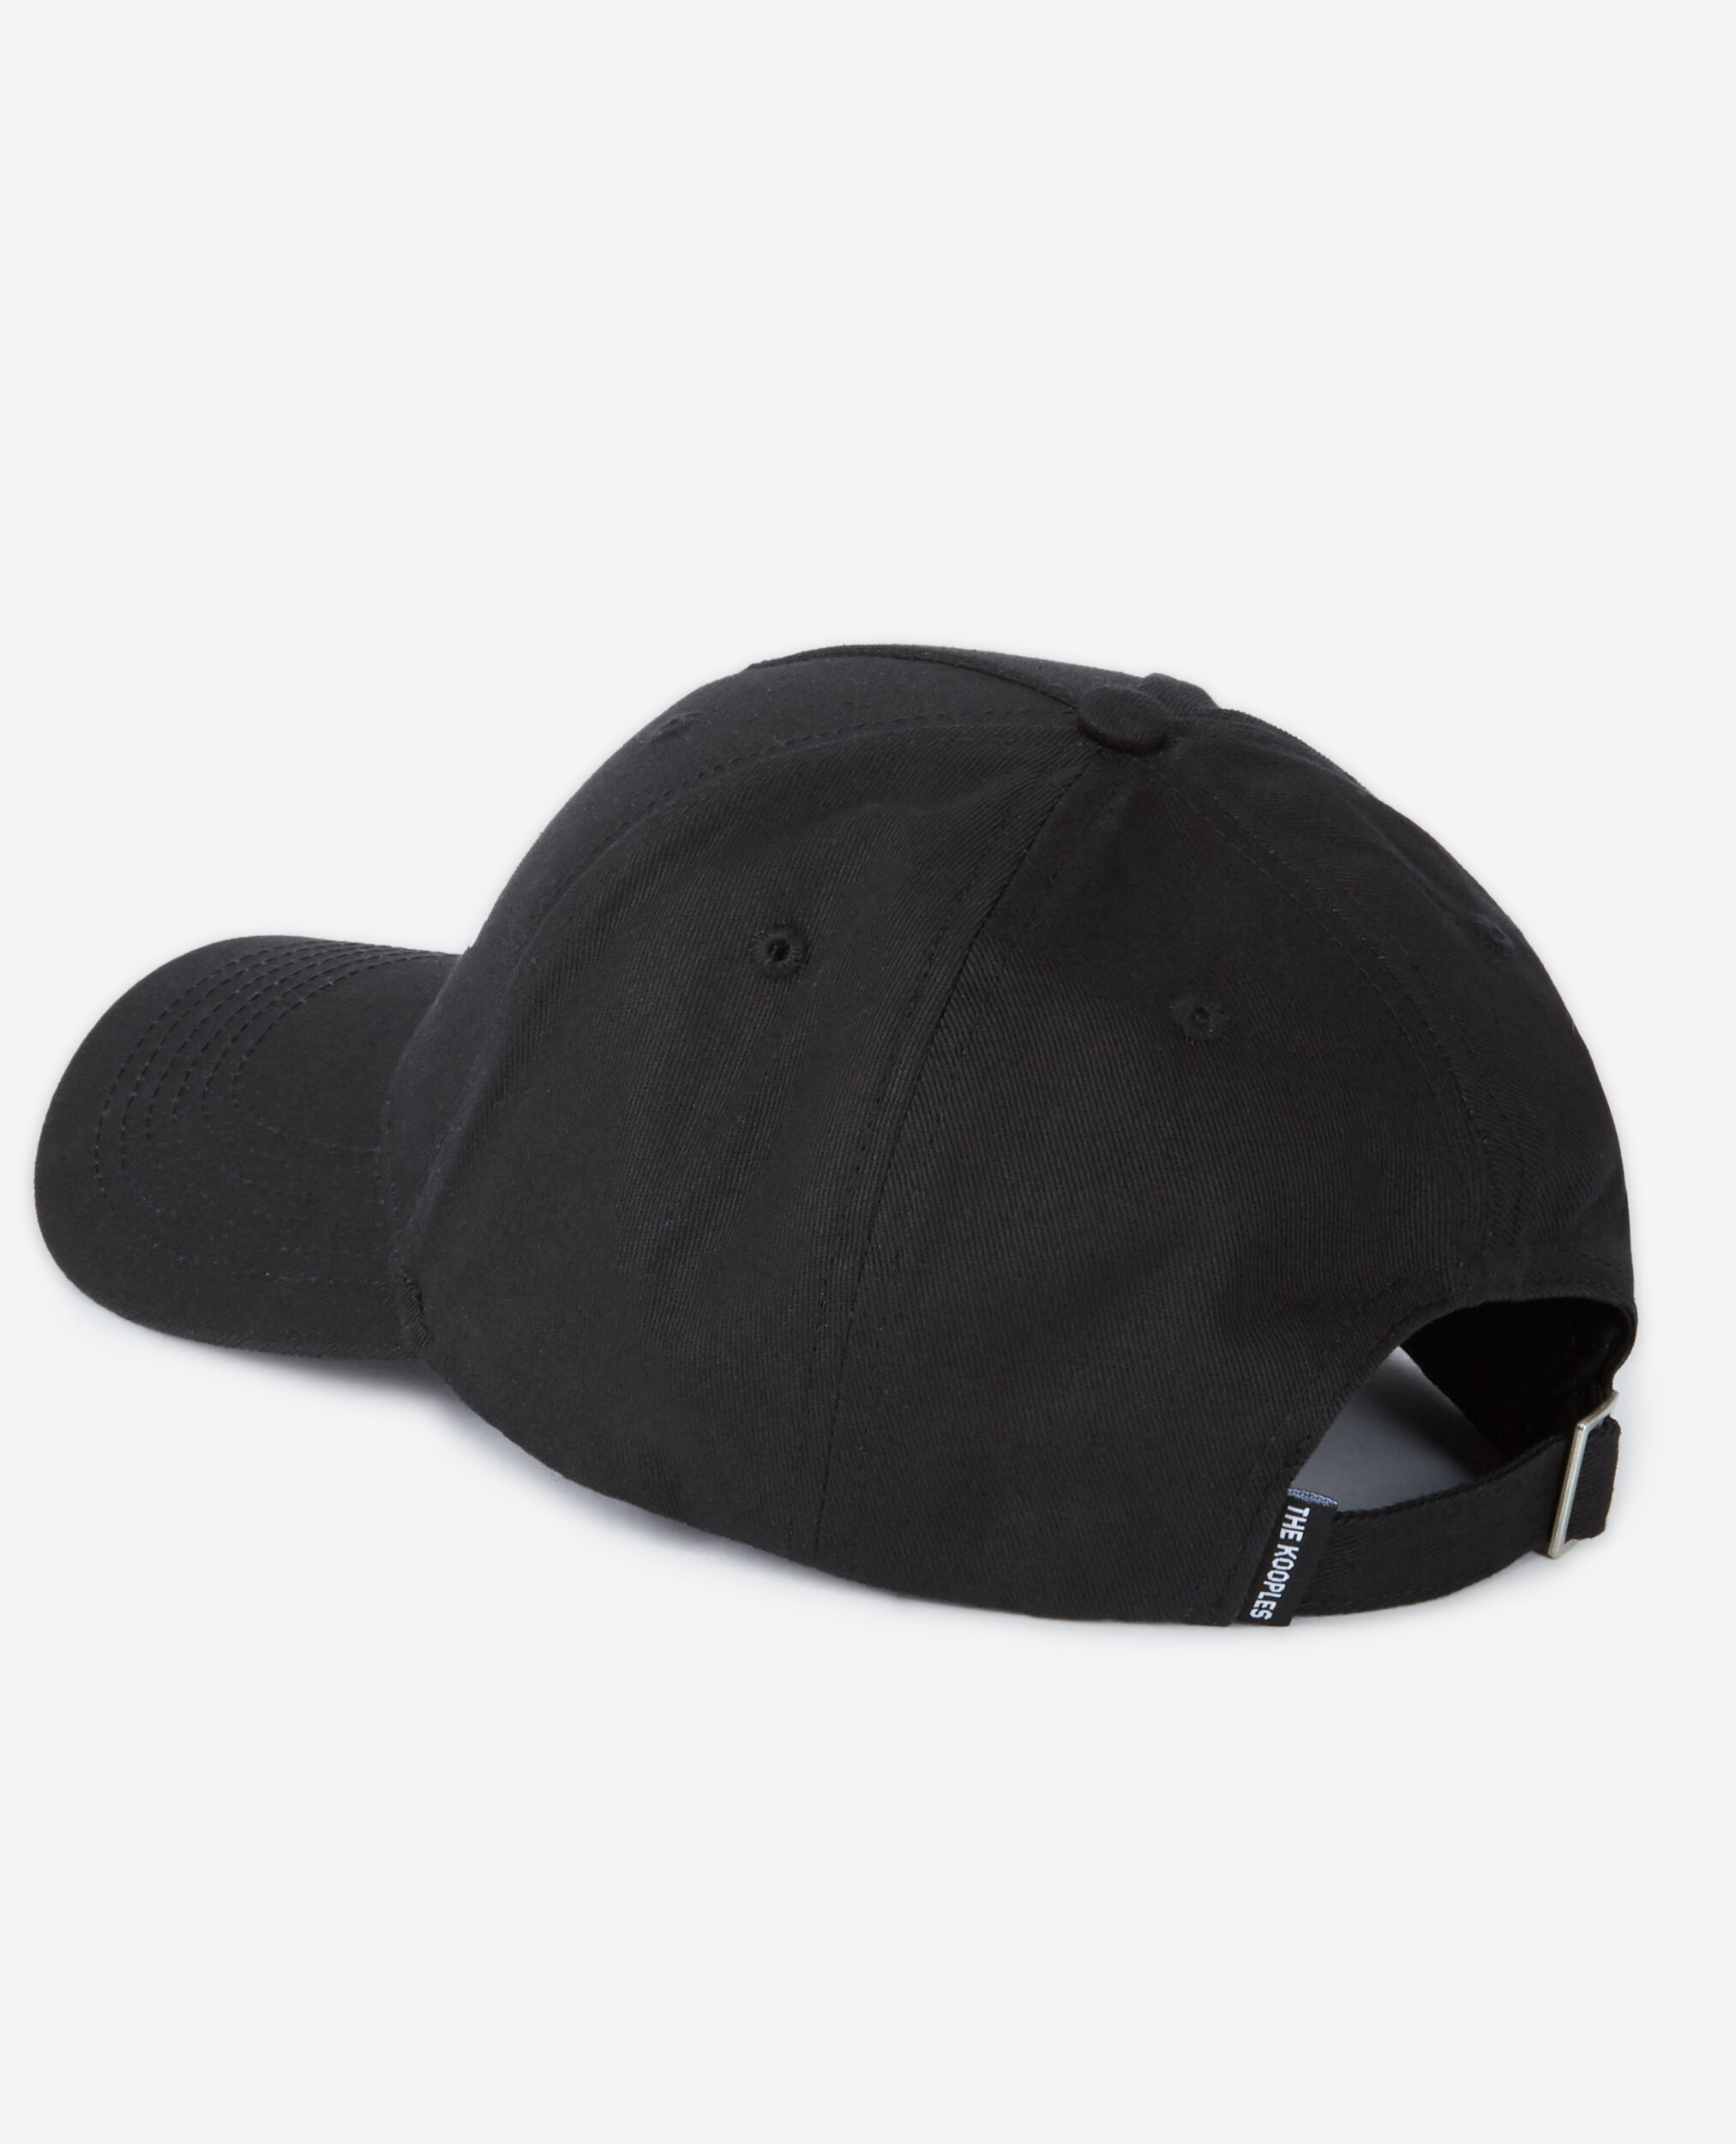 Black cotton cap with white logo, BLACK WHITE, hi-res image number null